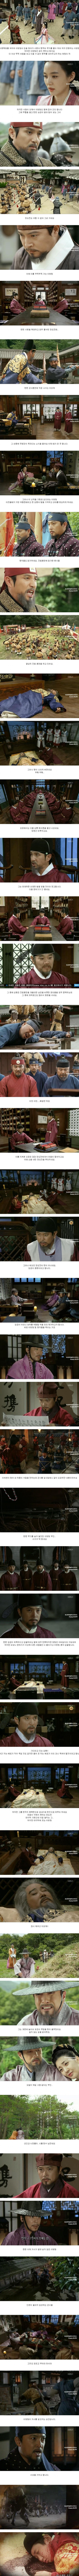 episodes 49 and 50 captures for the Korean drama 'Jeong Do-jeon'